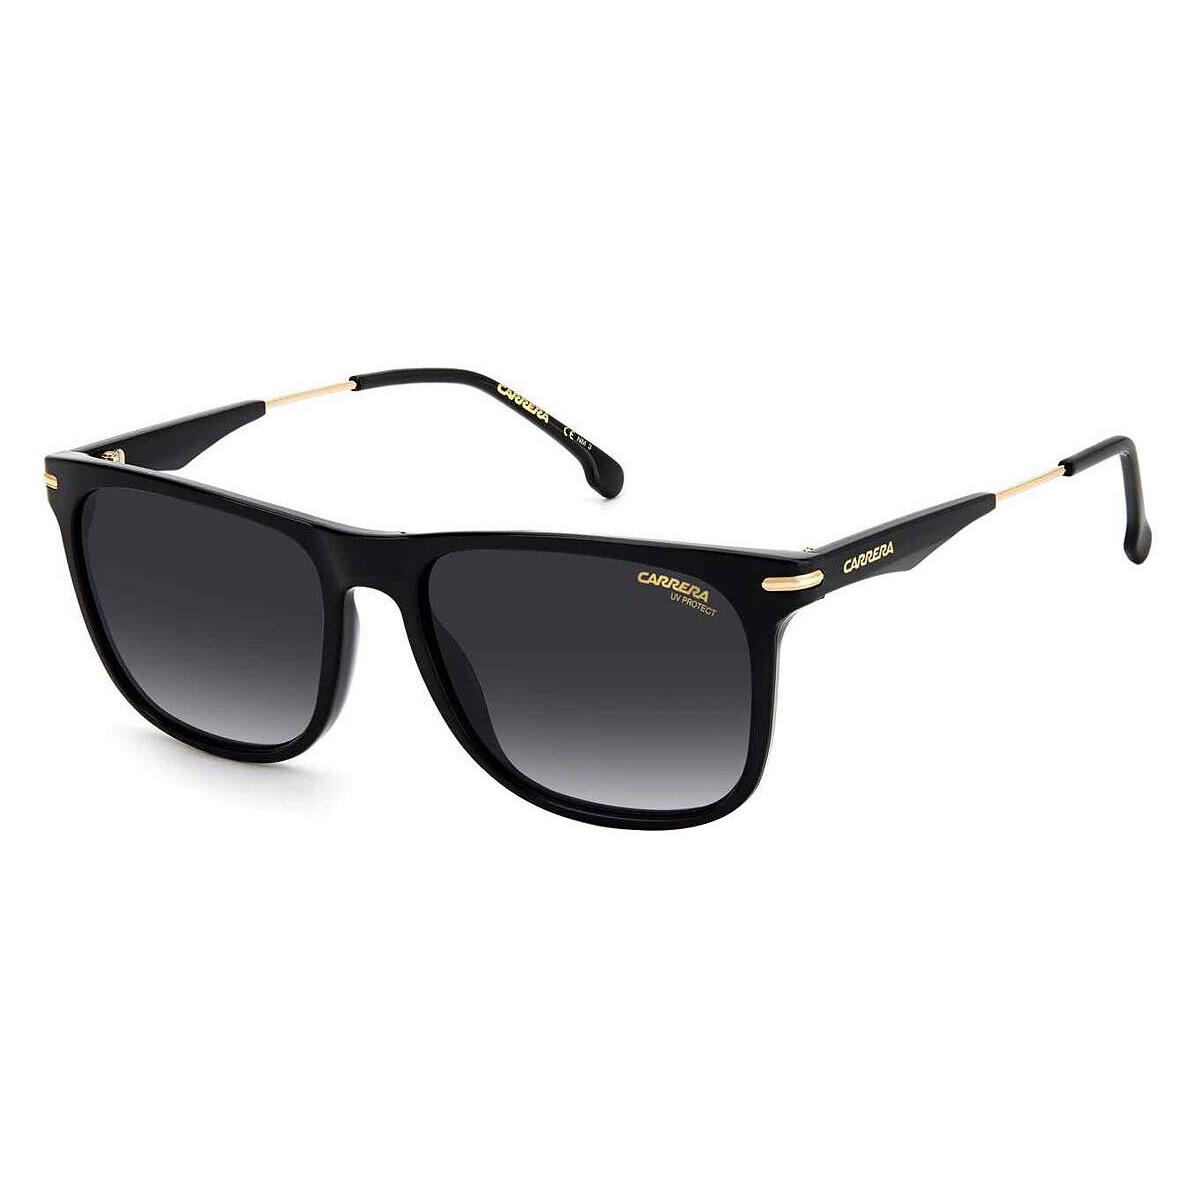 Carrera Car Sunglasses Men Black Gold / Gray Shaded 55mm